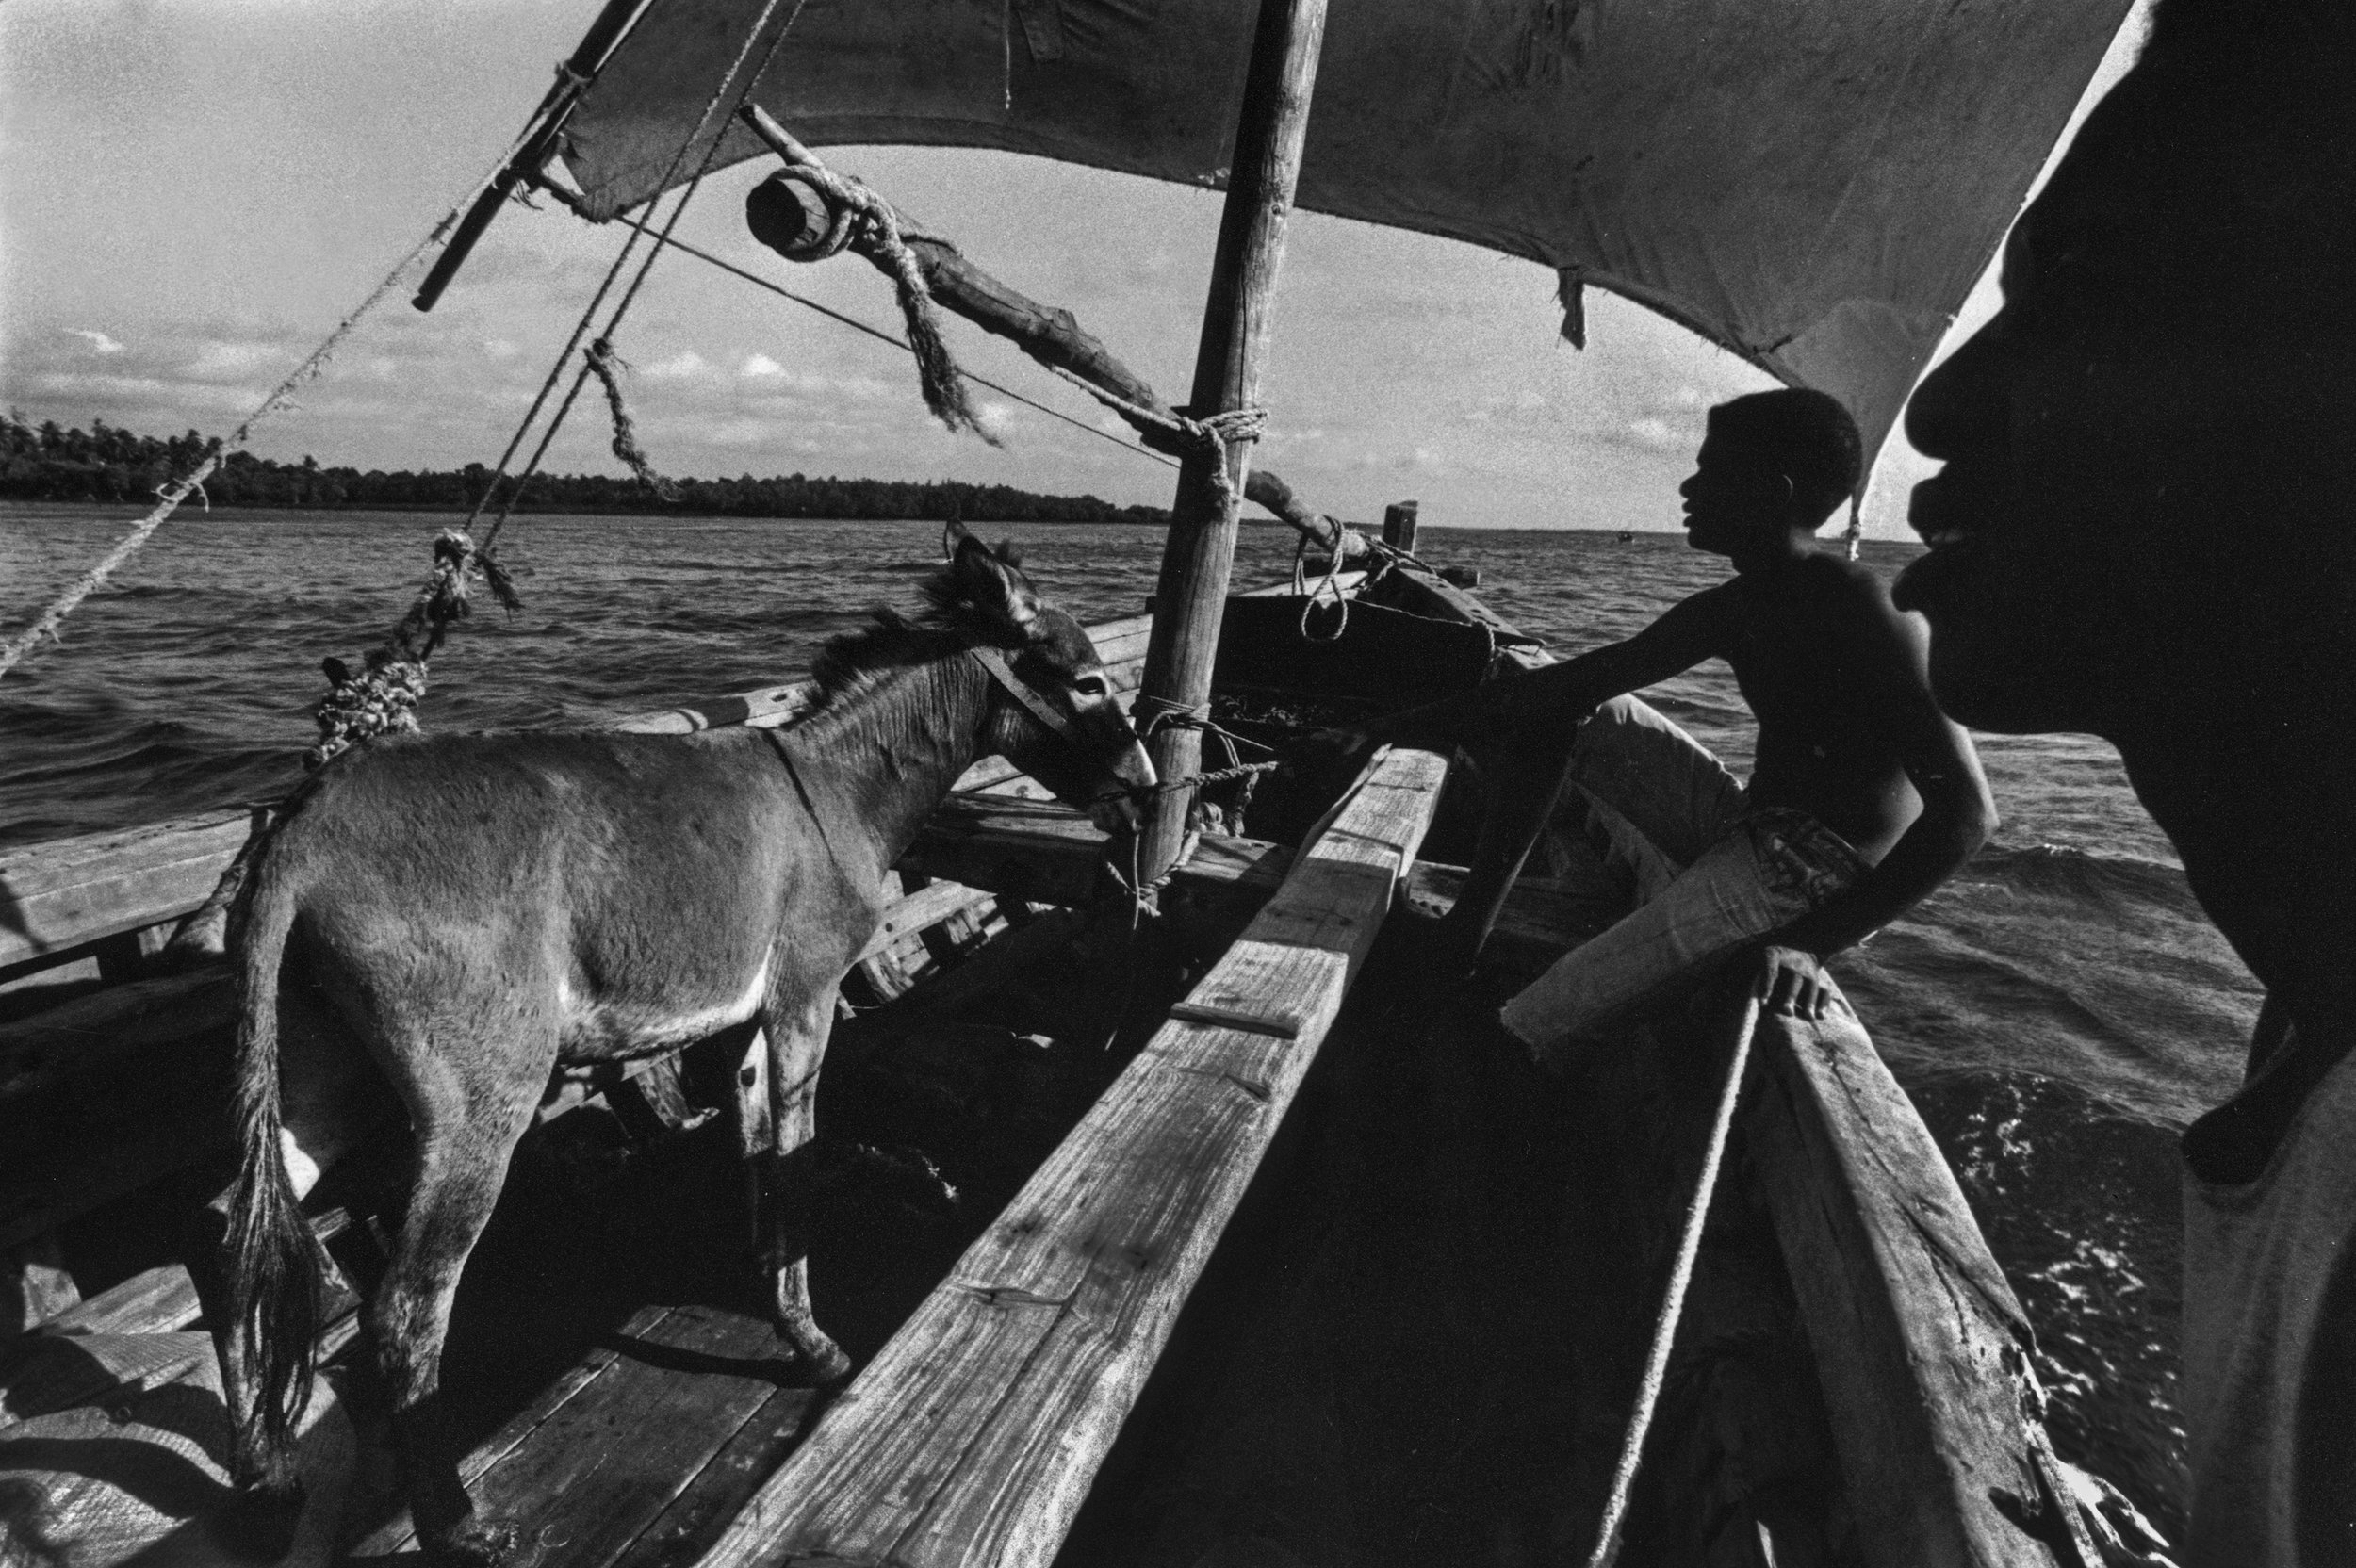  Donkey transported to outer Island. Off the coast of Mombasa, Kenya. 1999 